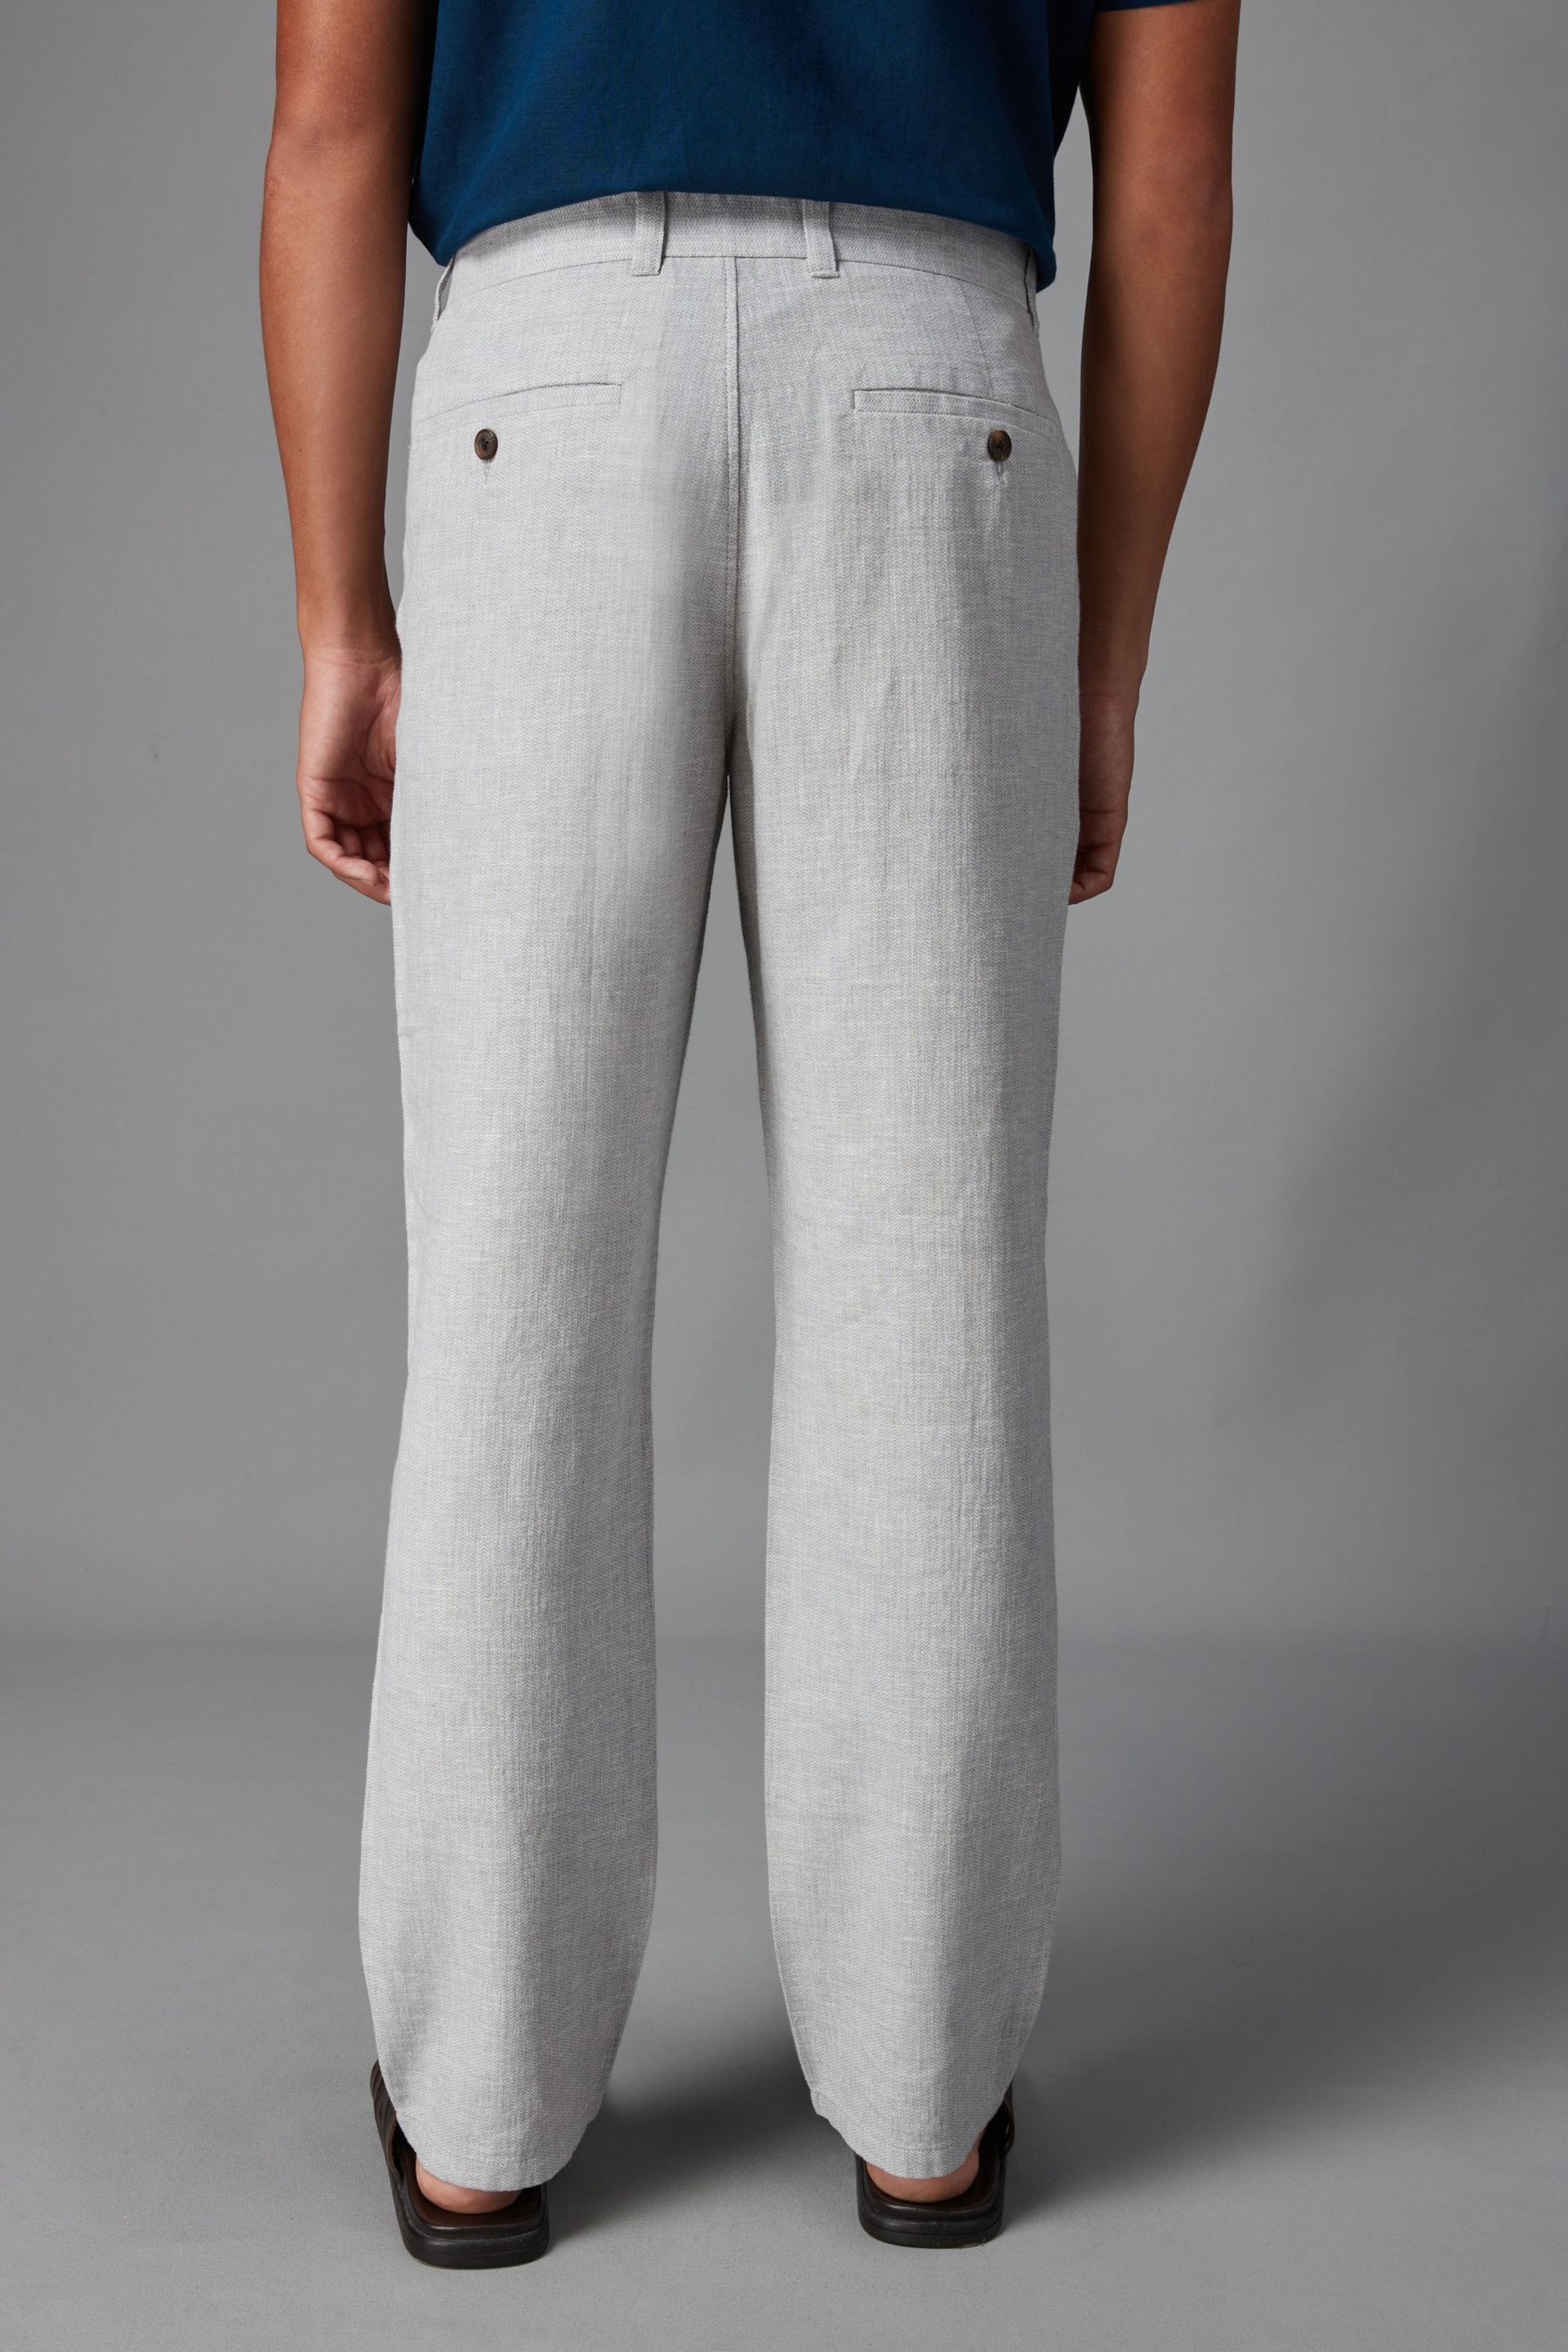 Light Grey Textured Linen Blend Trousers - Image 3 of 5